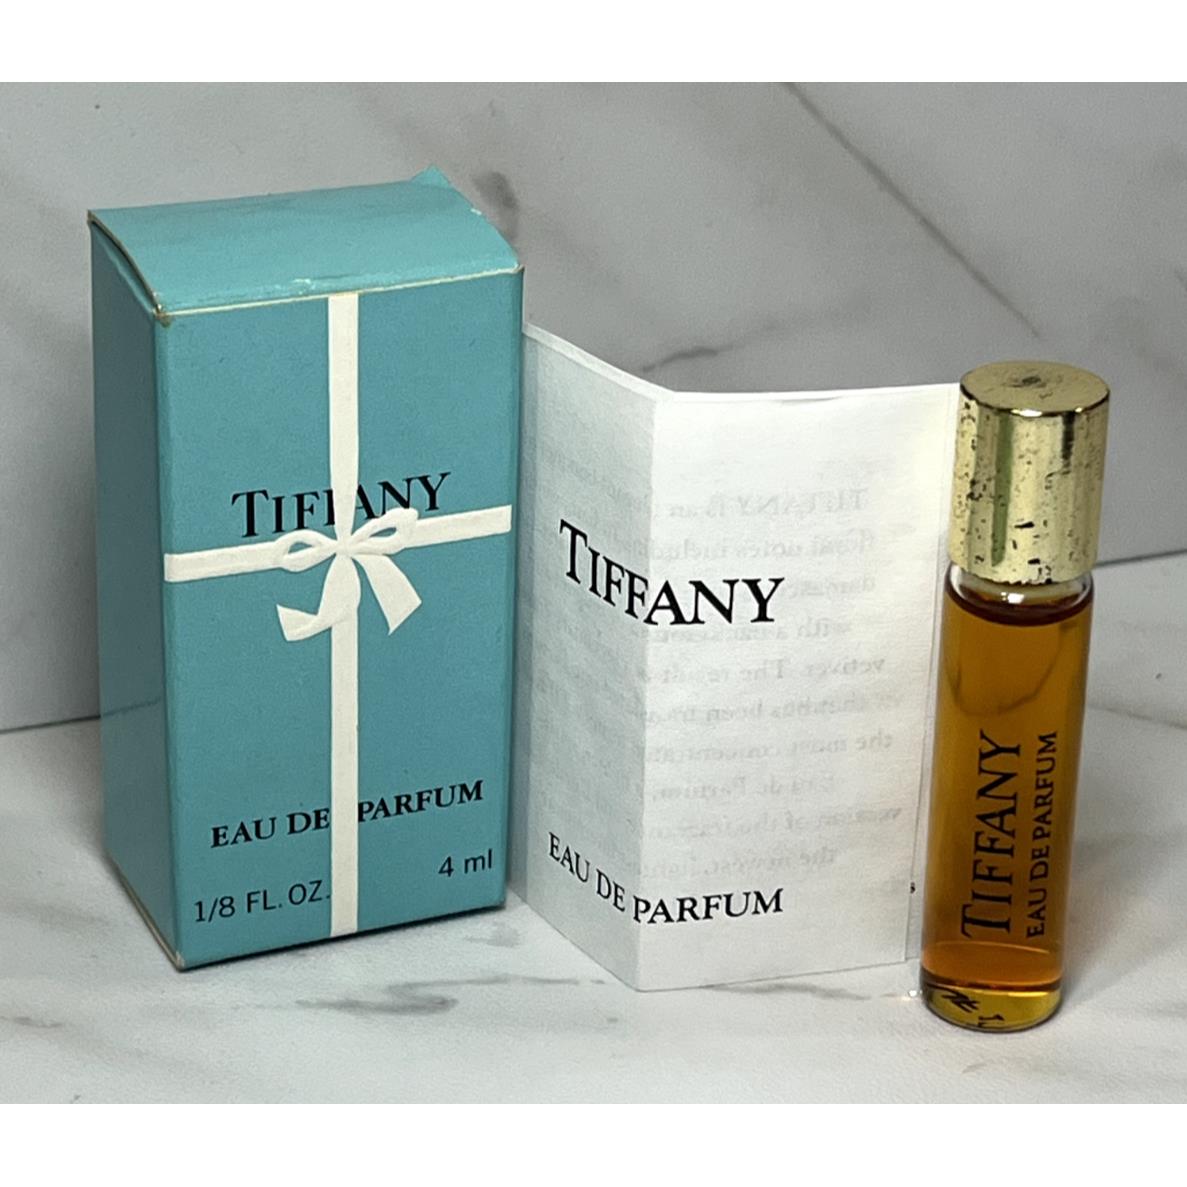 Tiffany Eau De Parfum Edp Splash 1/8 oz